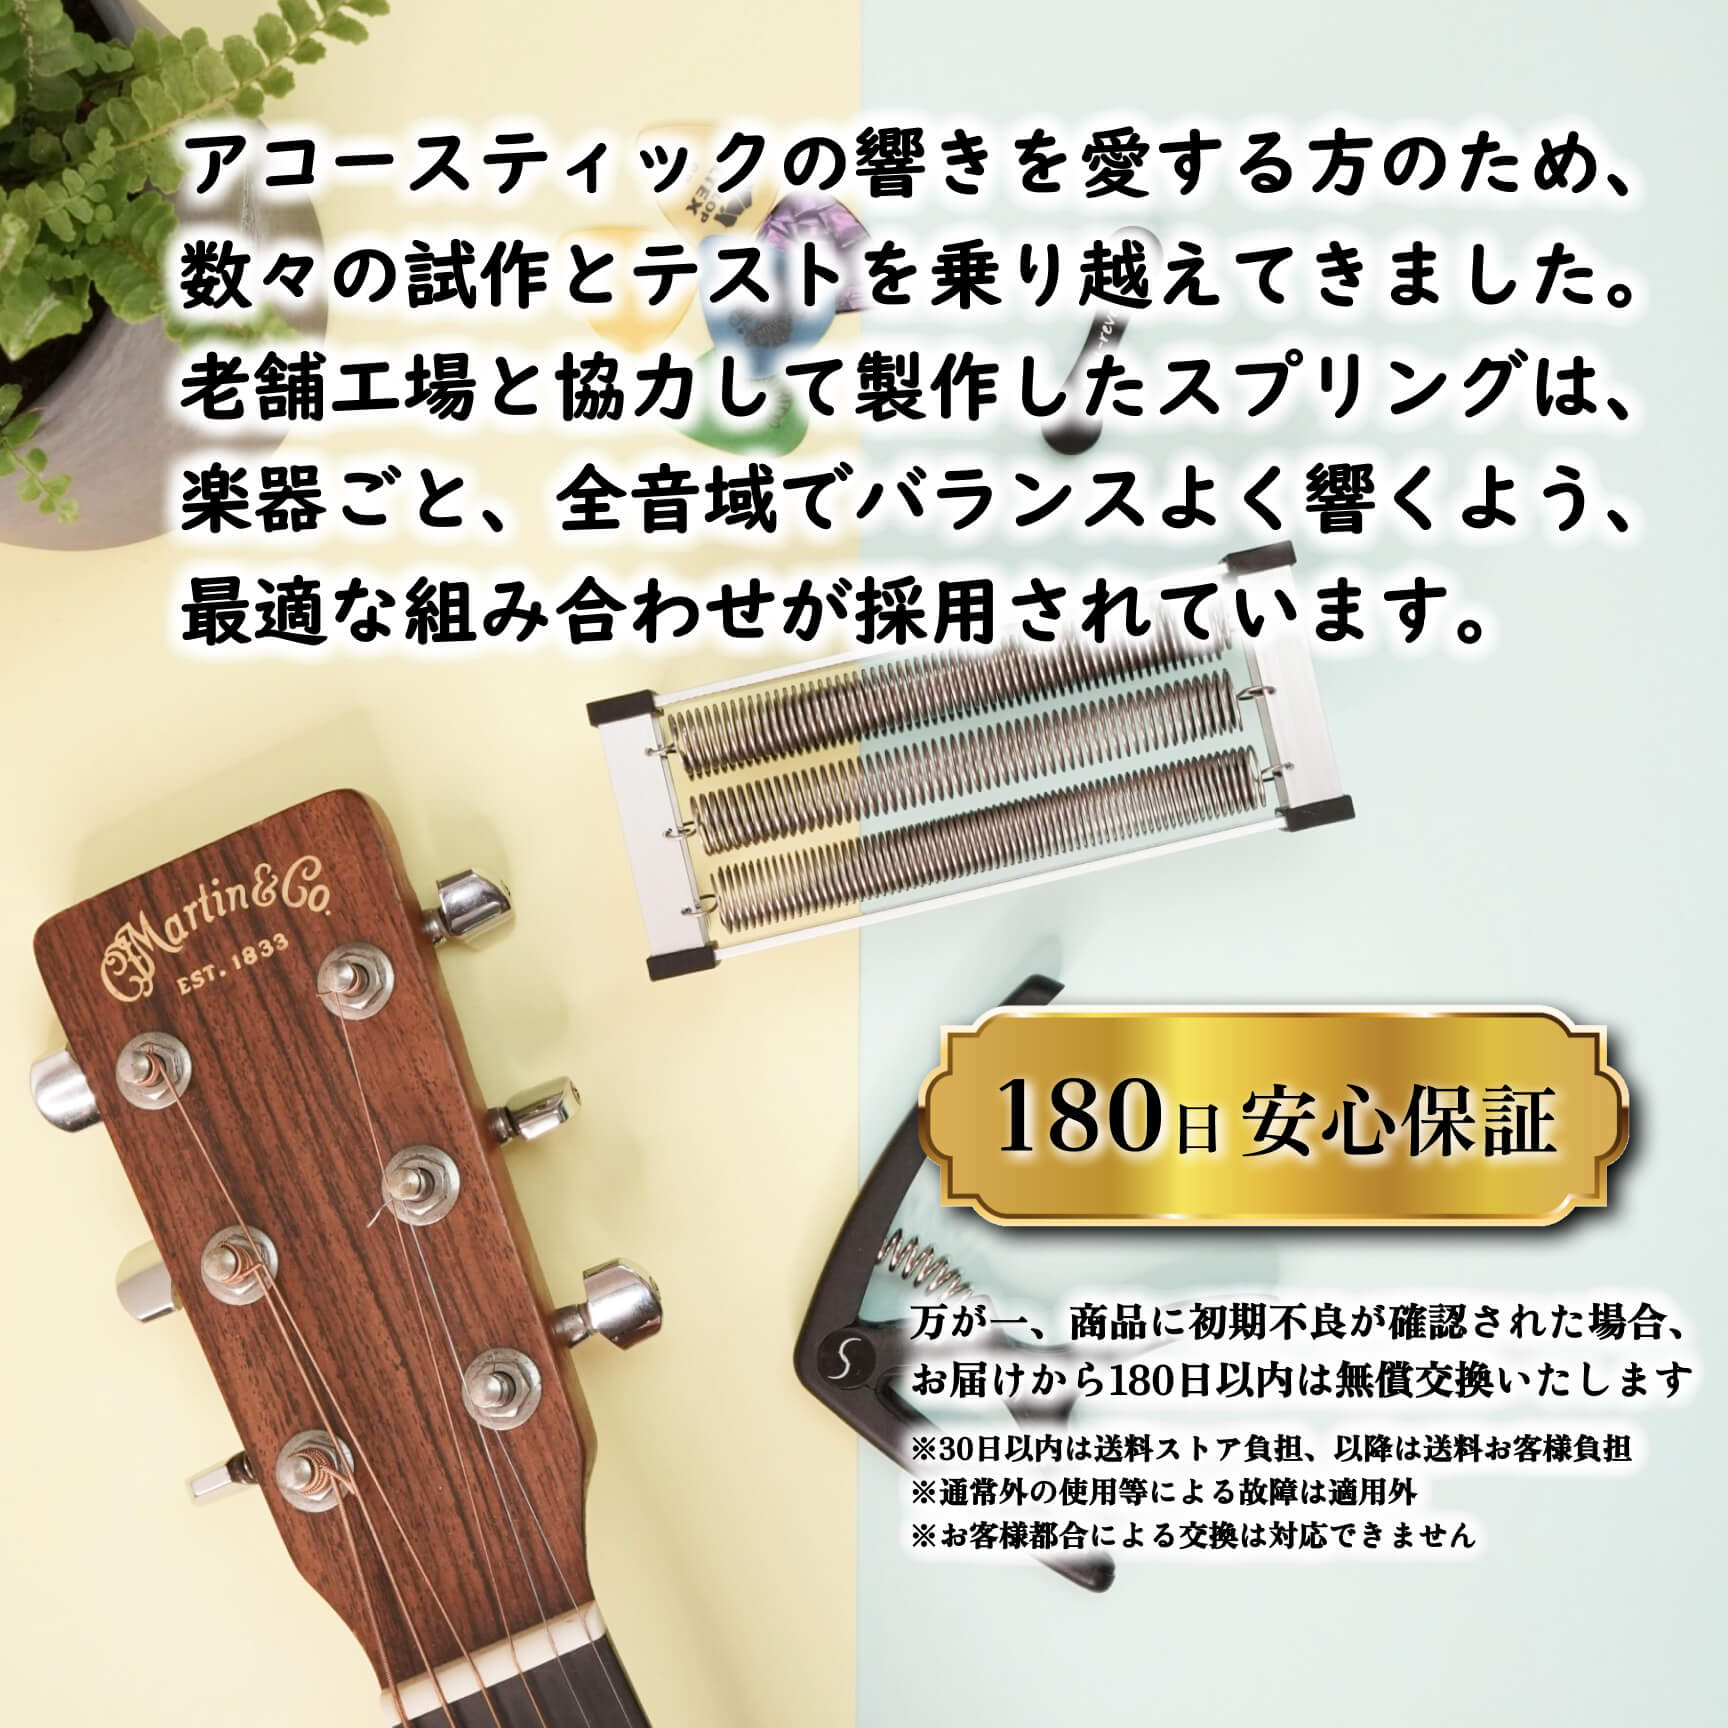 natu-reverb AC-1 MAX for acoustic guitar